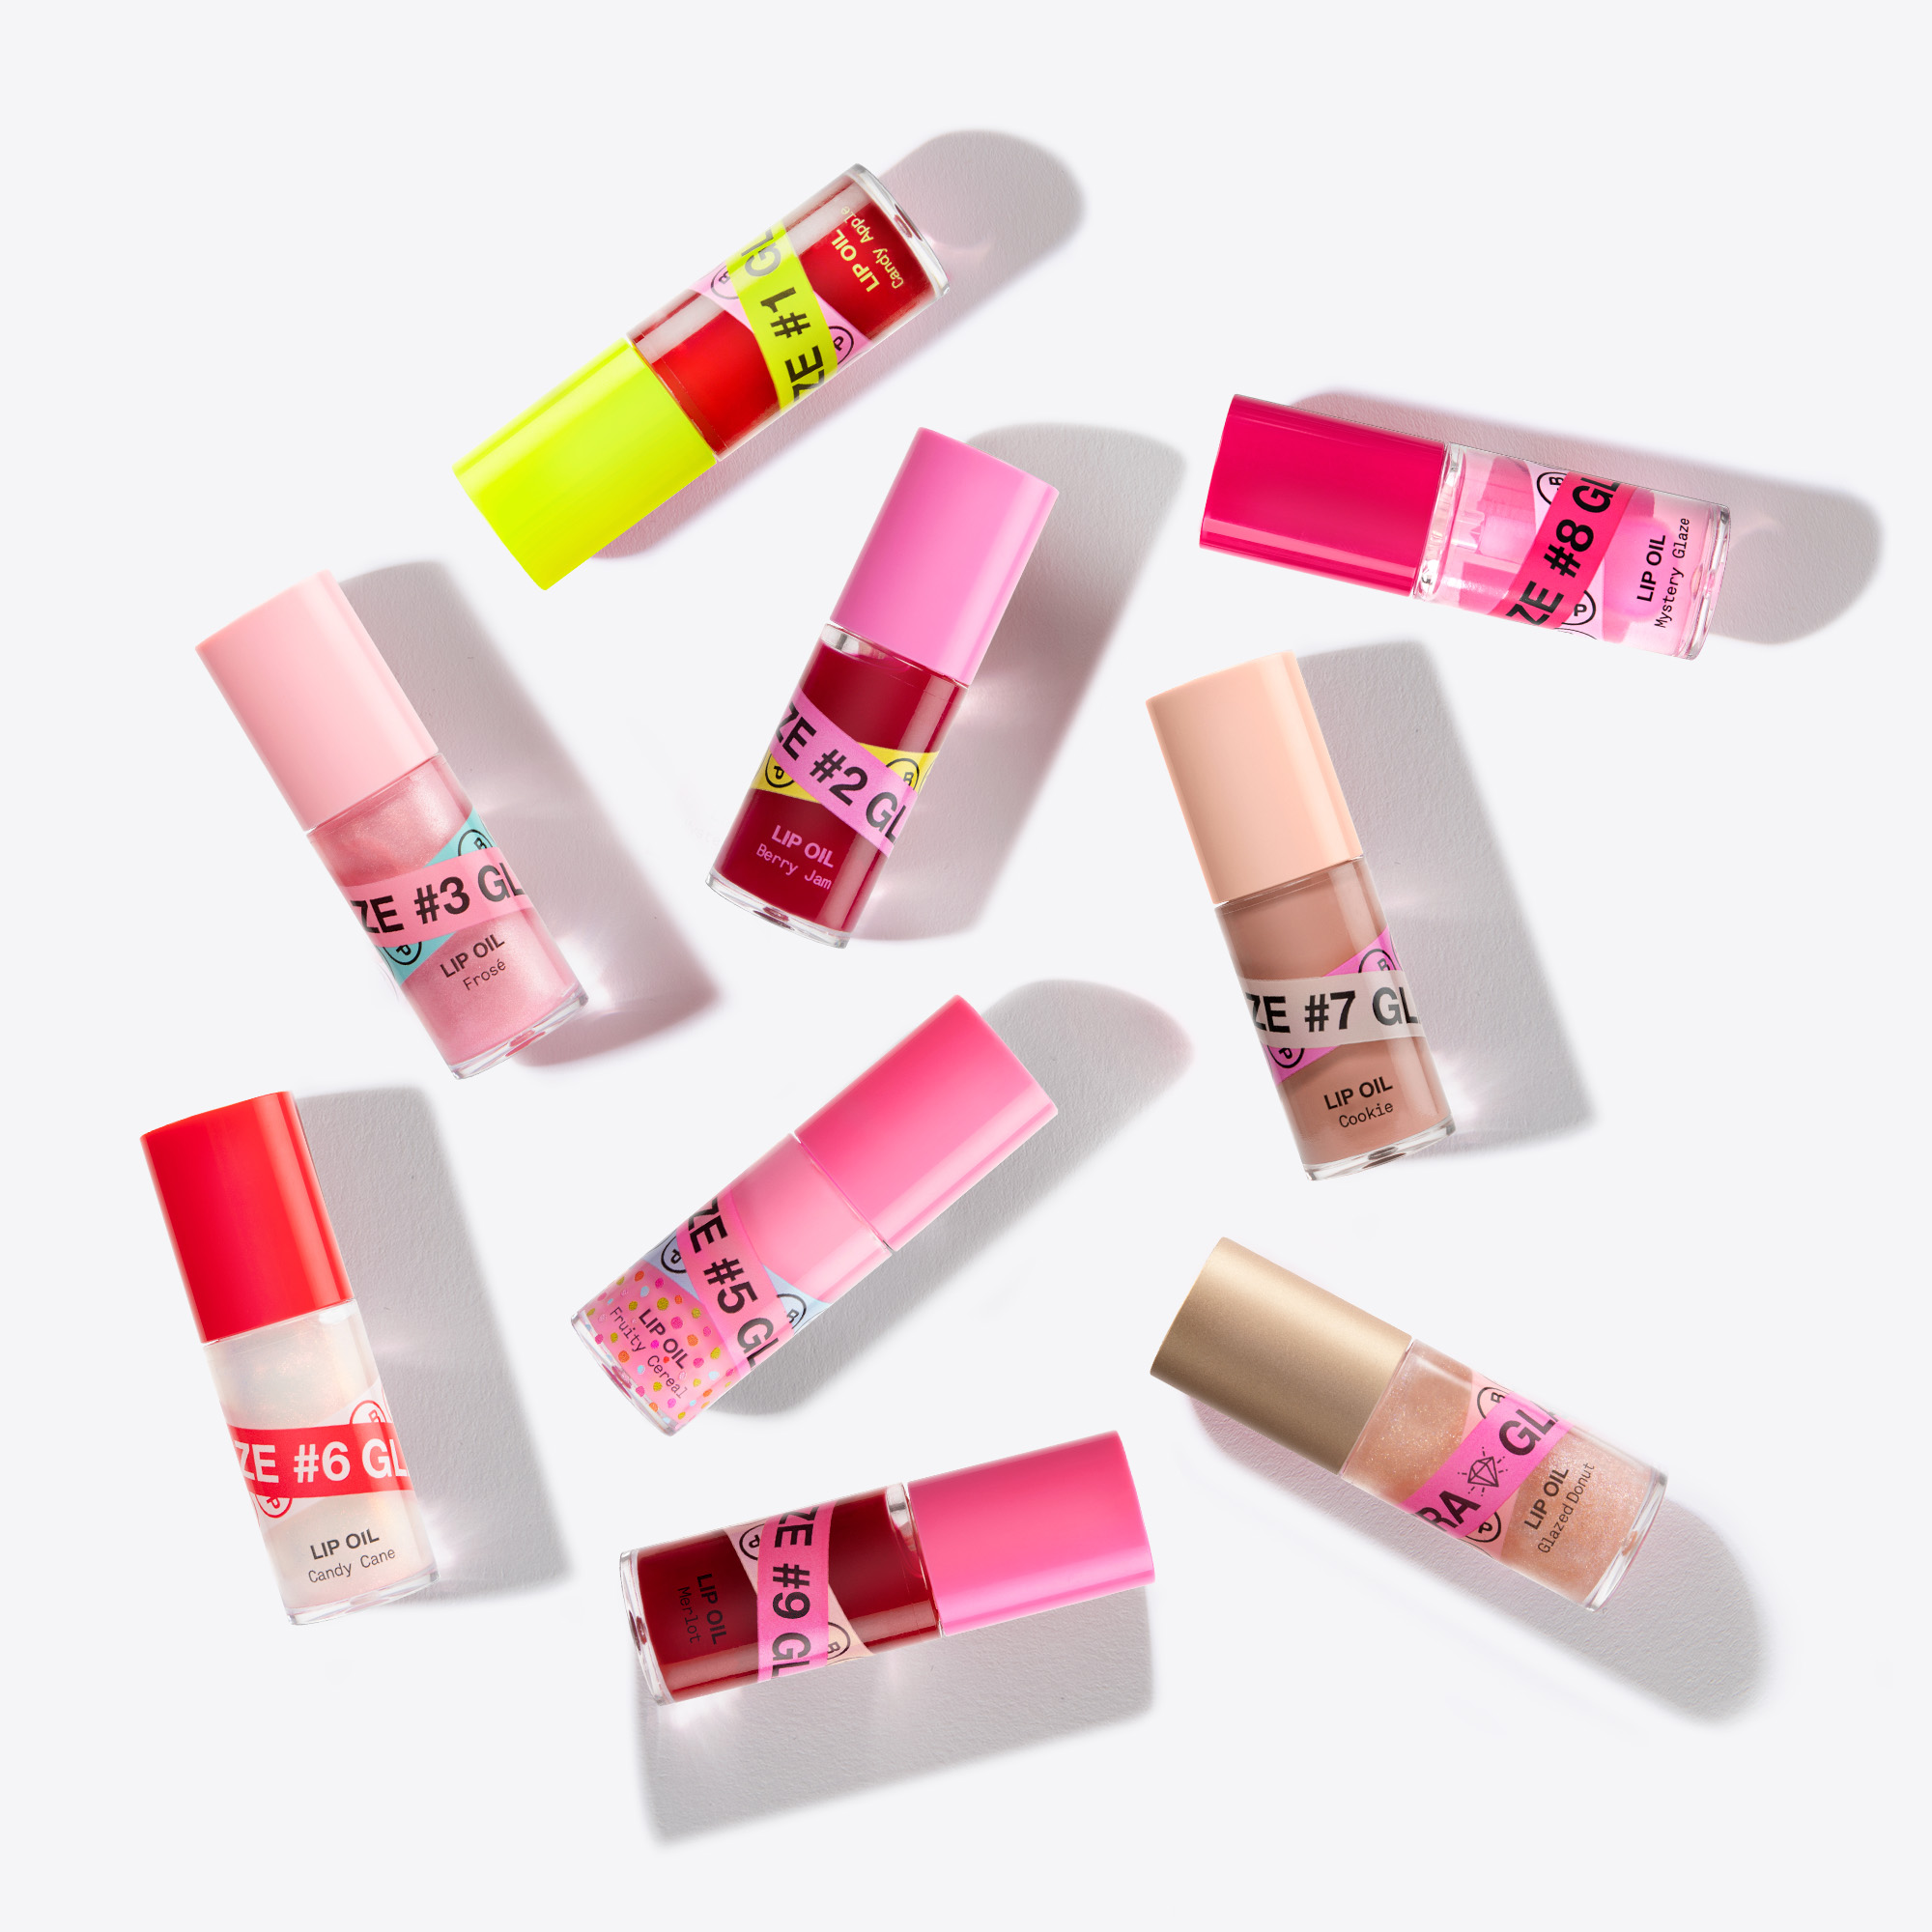 Glossy Pop Newsletter: Innbeauty Project's lip oil has been viral